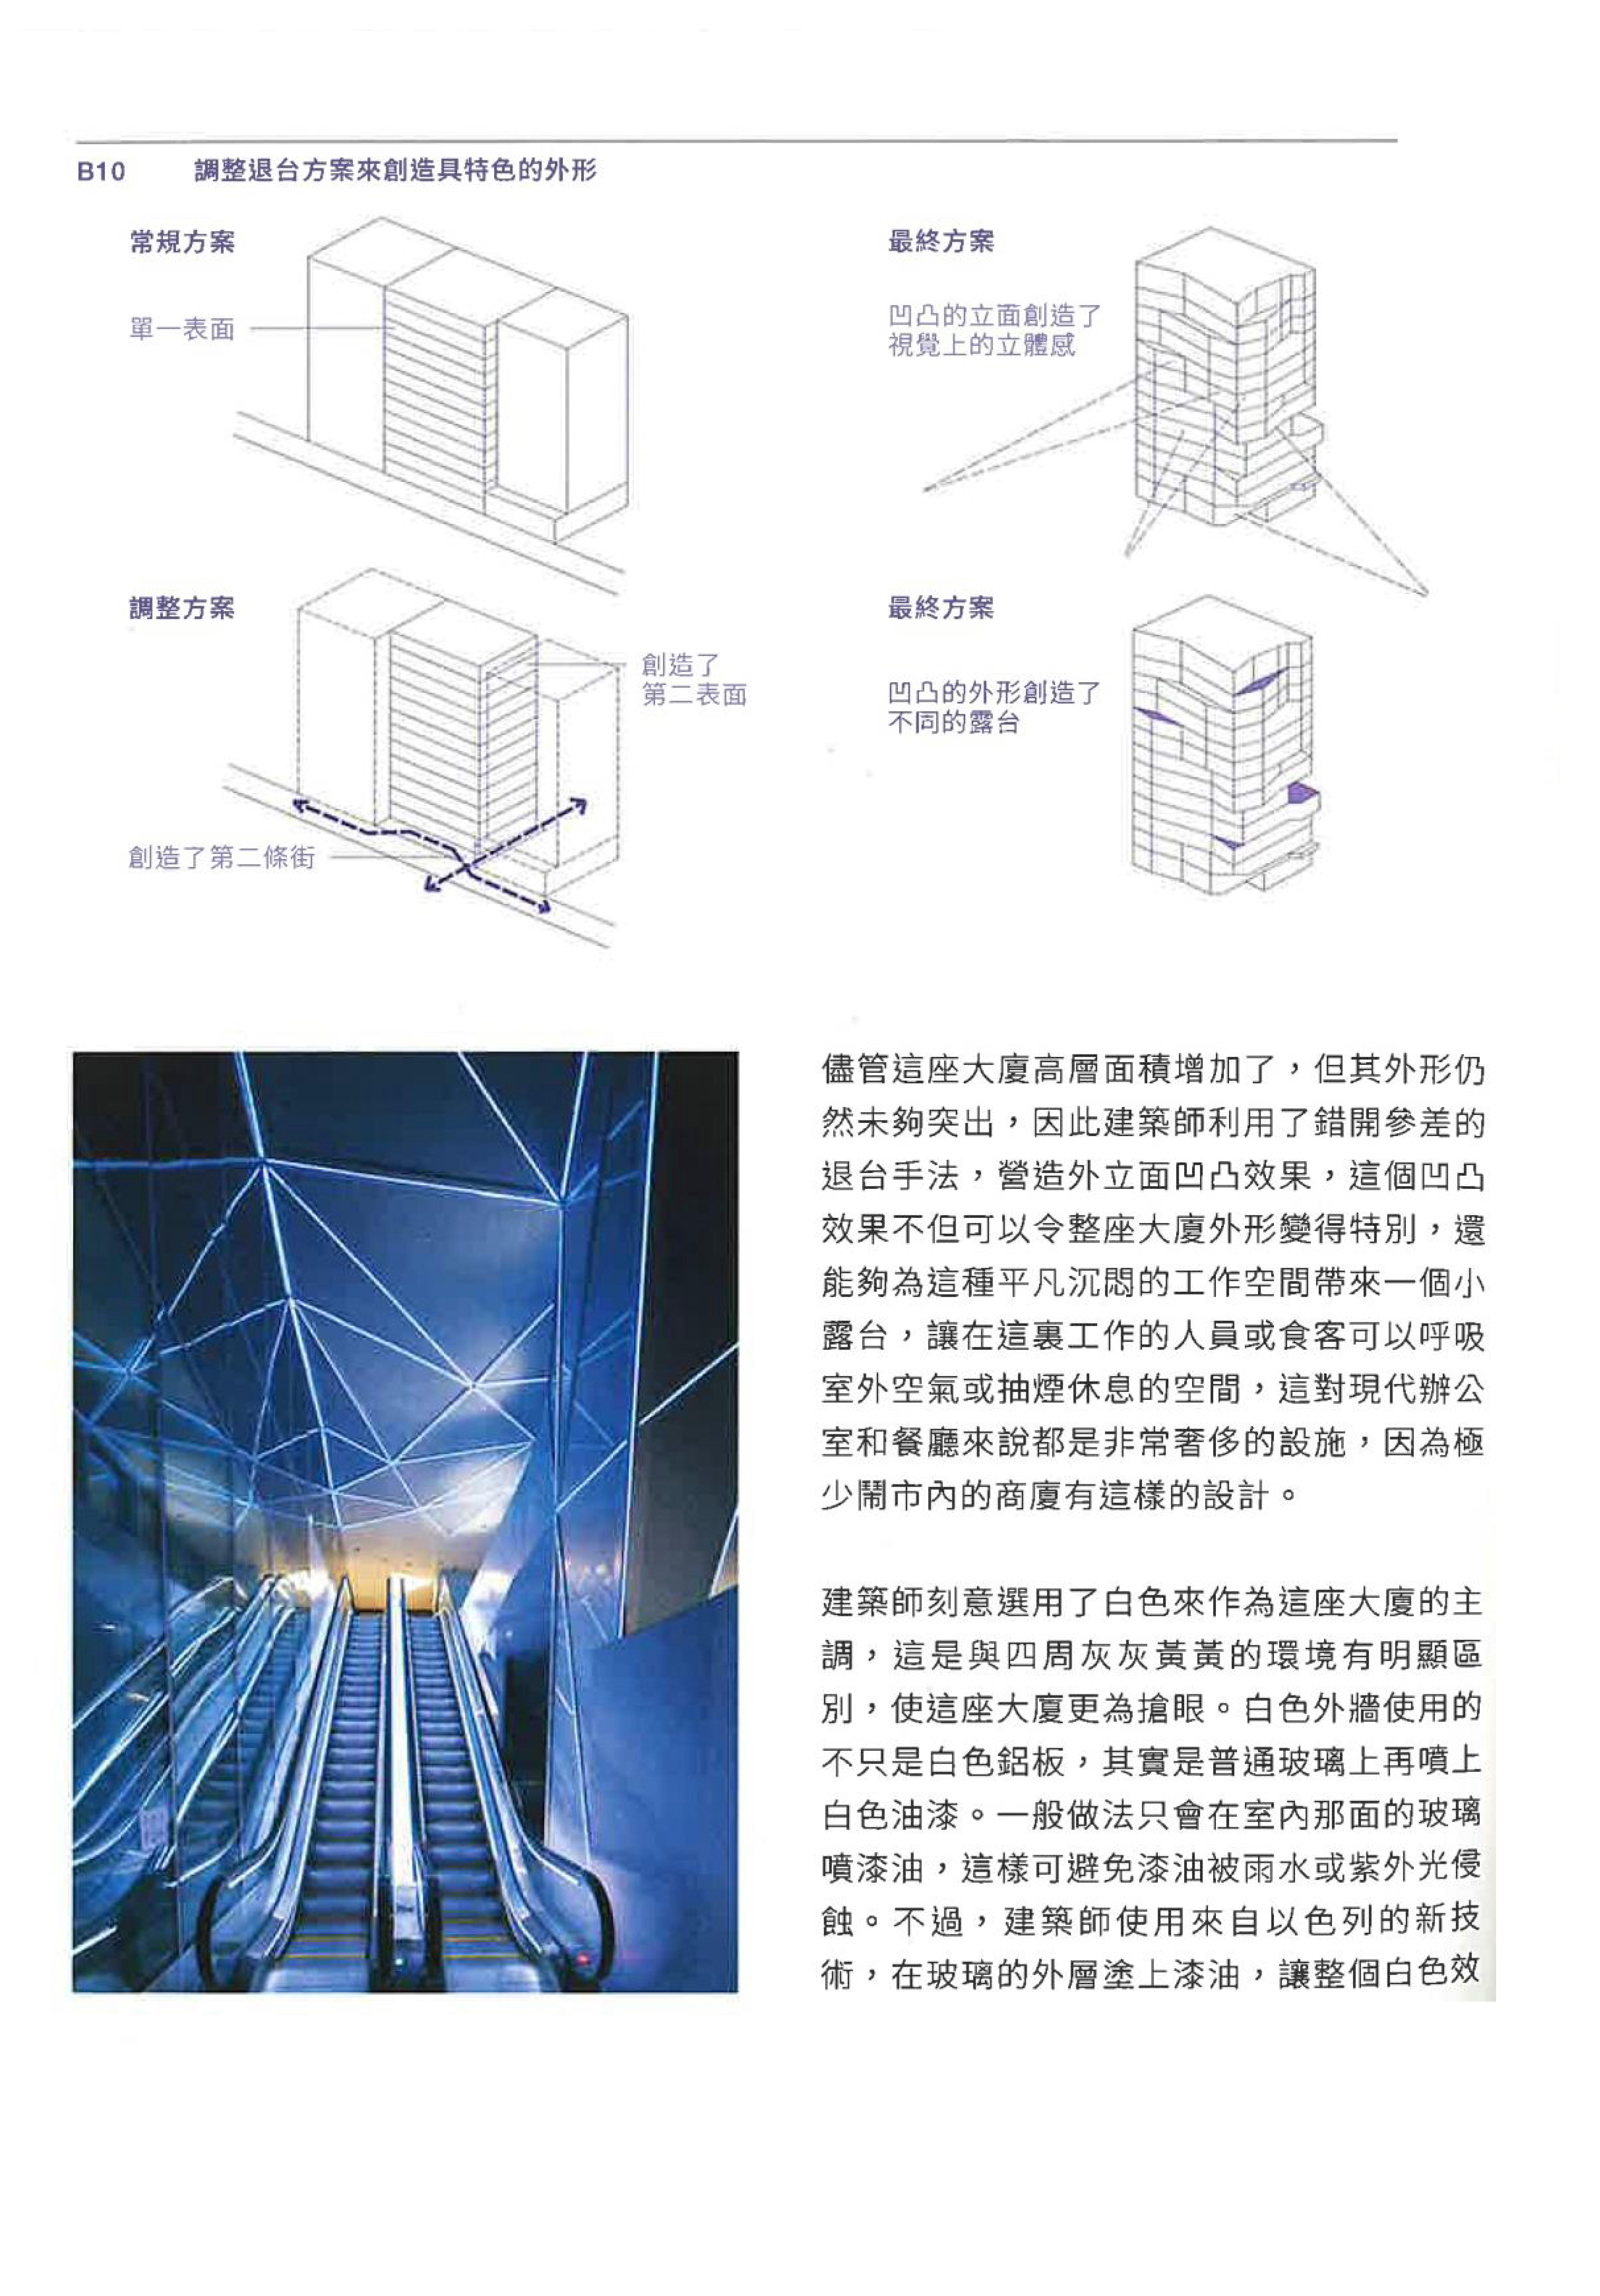 Publication of ‘Architecture Touch: Hong Kong’ 《築覺VI：築遊香港》